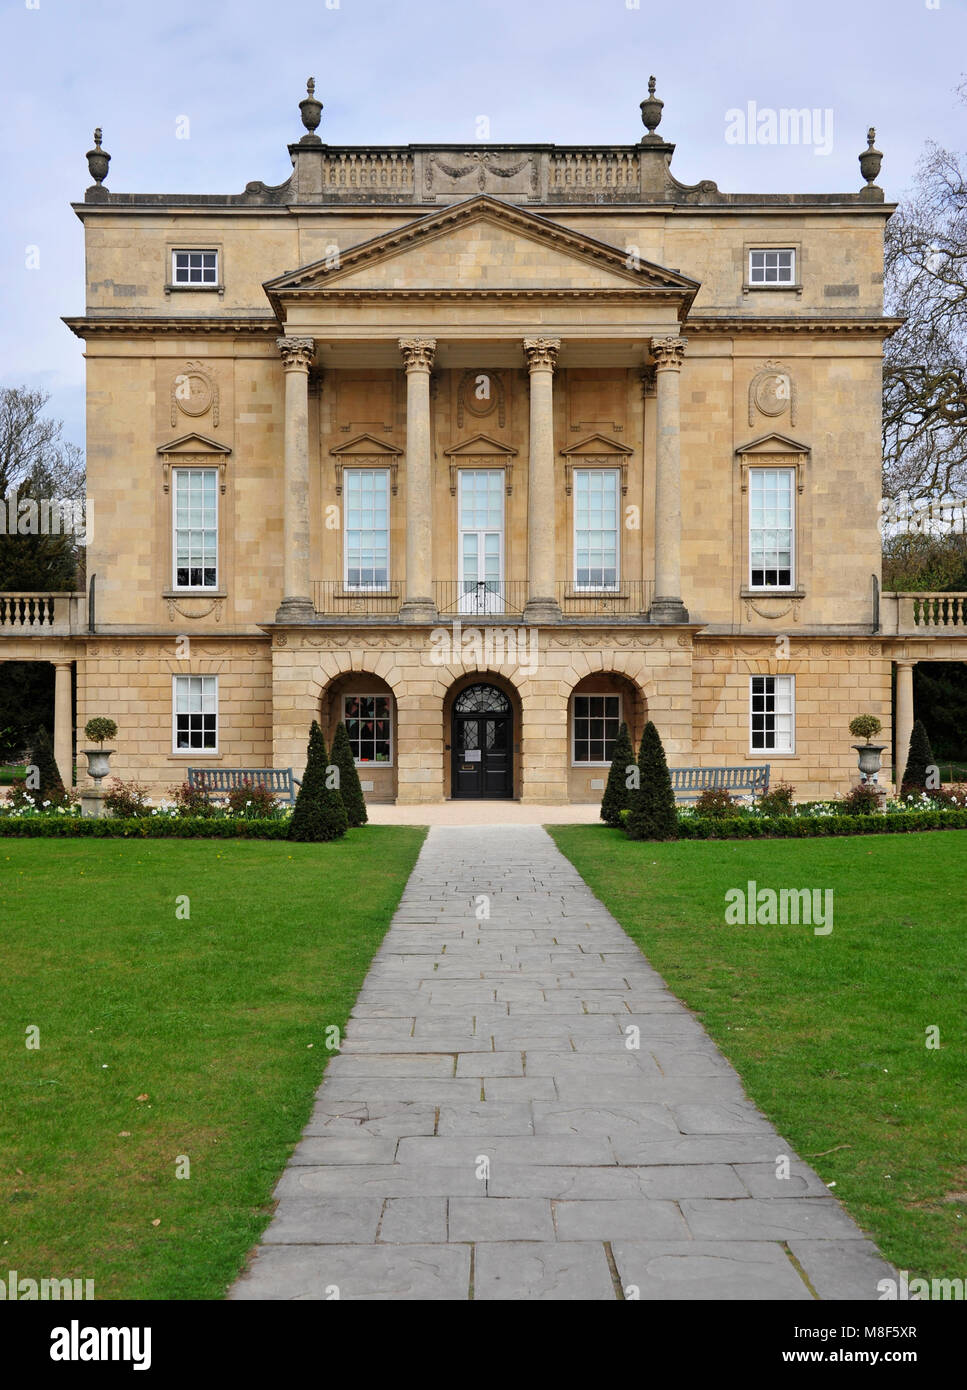 L'Holburne Museum di Giardini Sidney nella città di Bath in Inghilterra occidentale Foto Stock